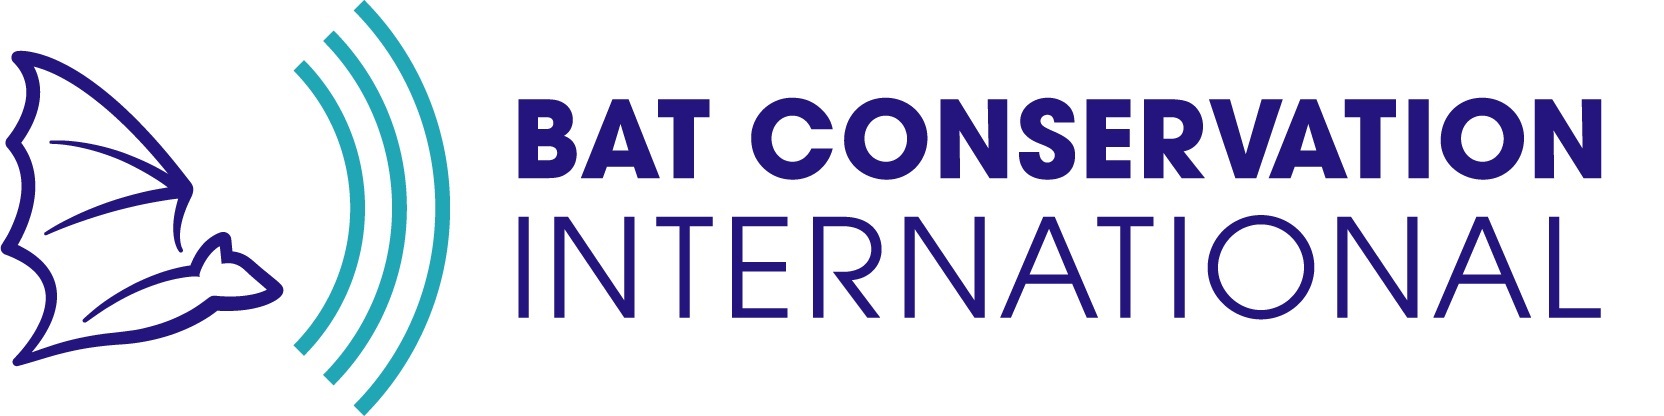 The Bat Conservation International logo